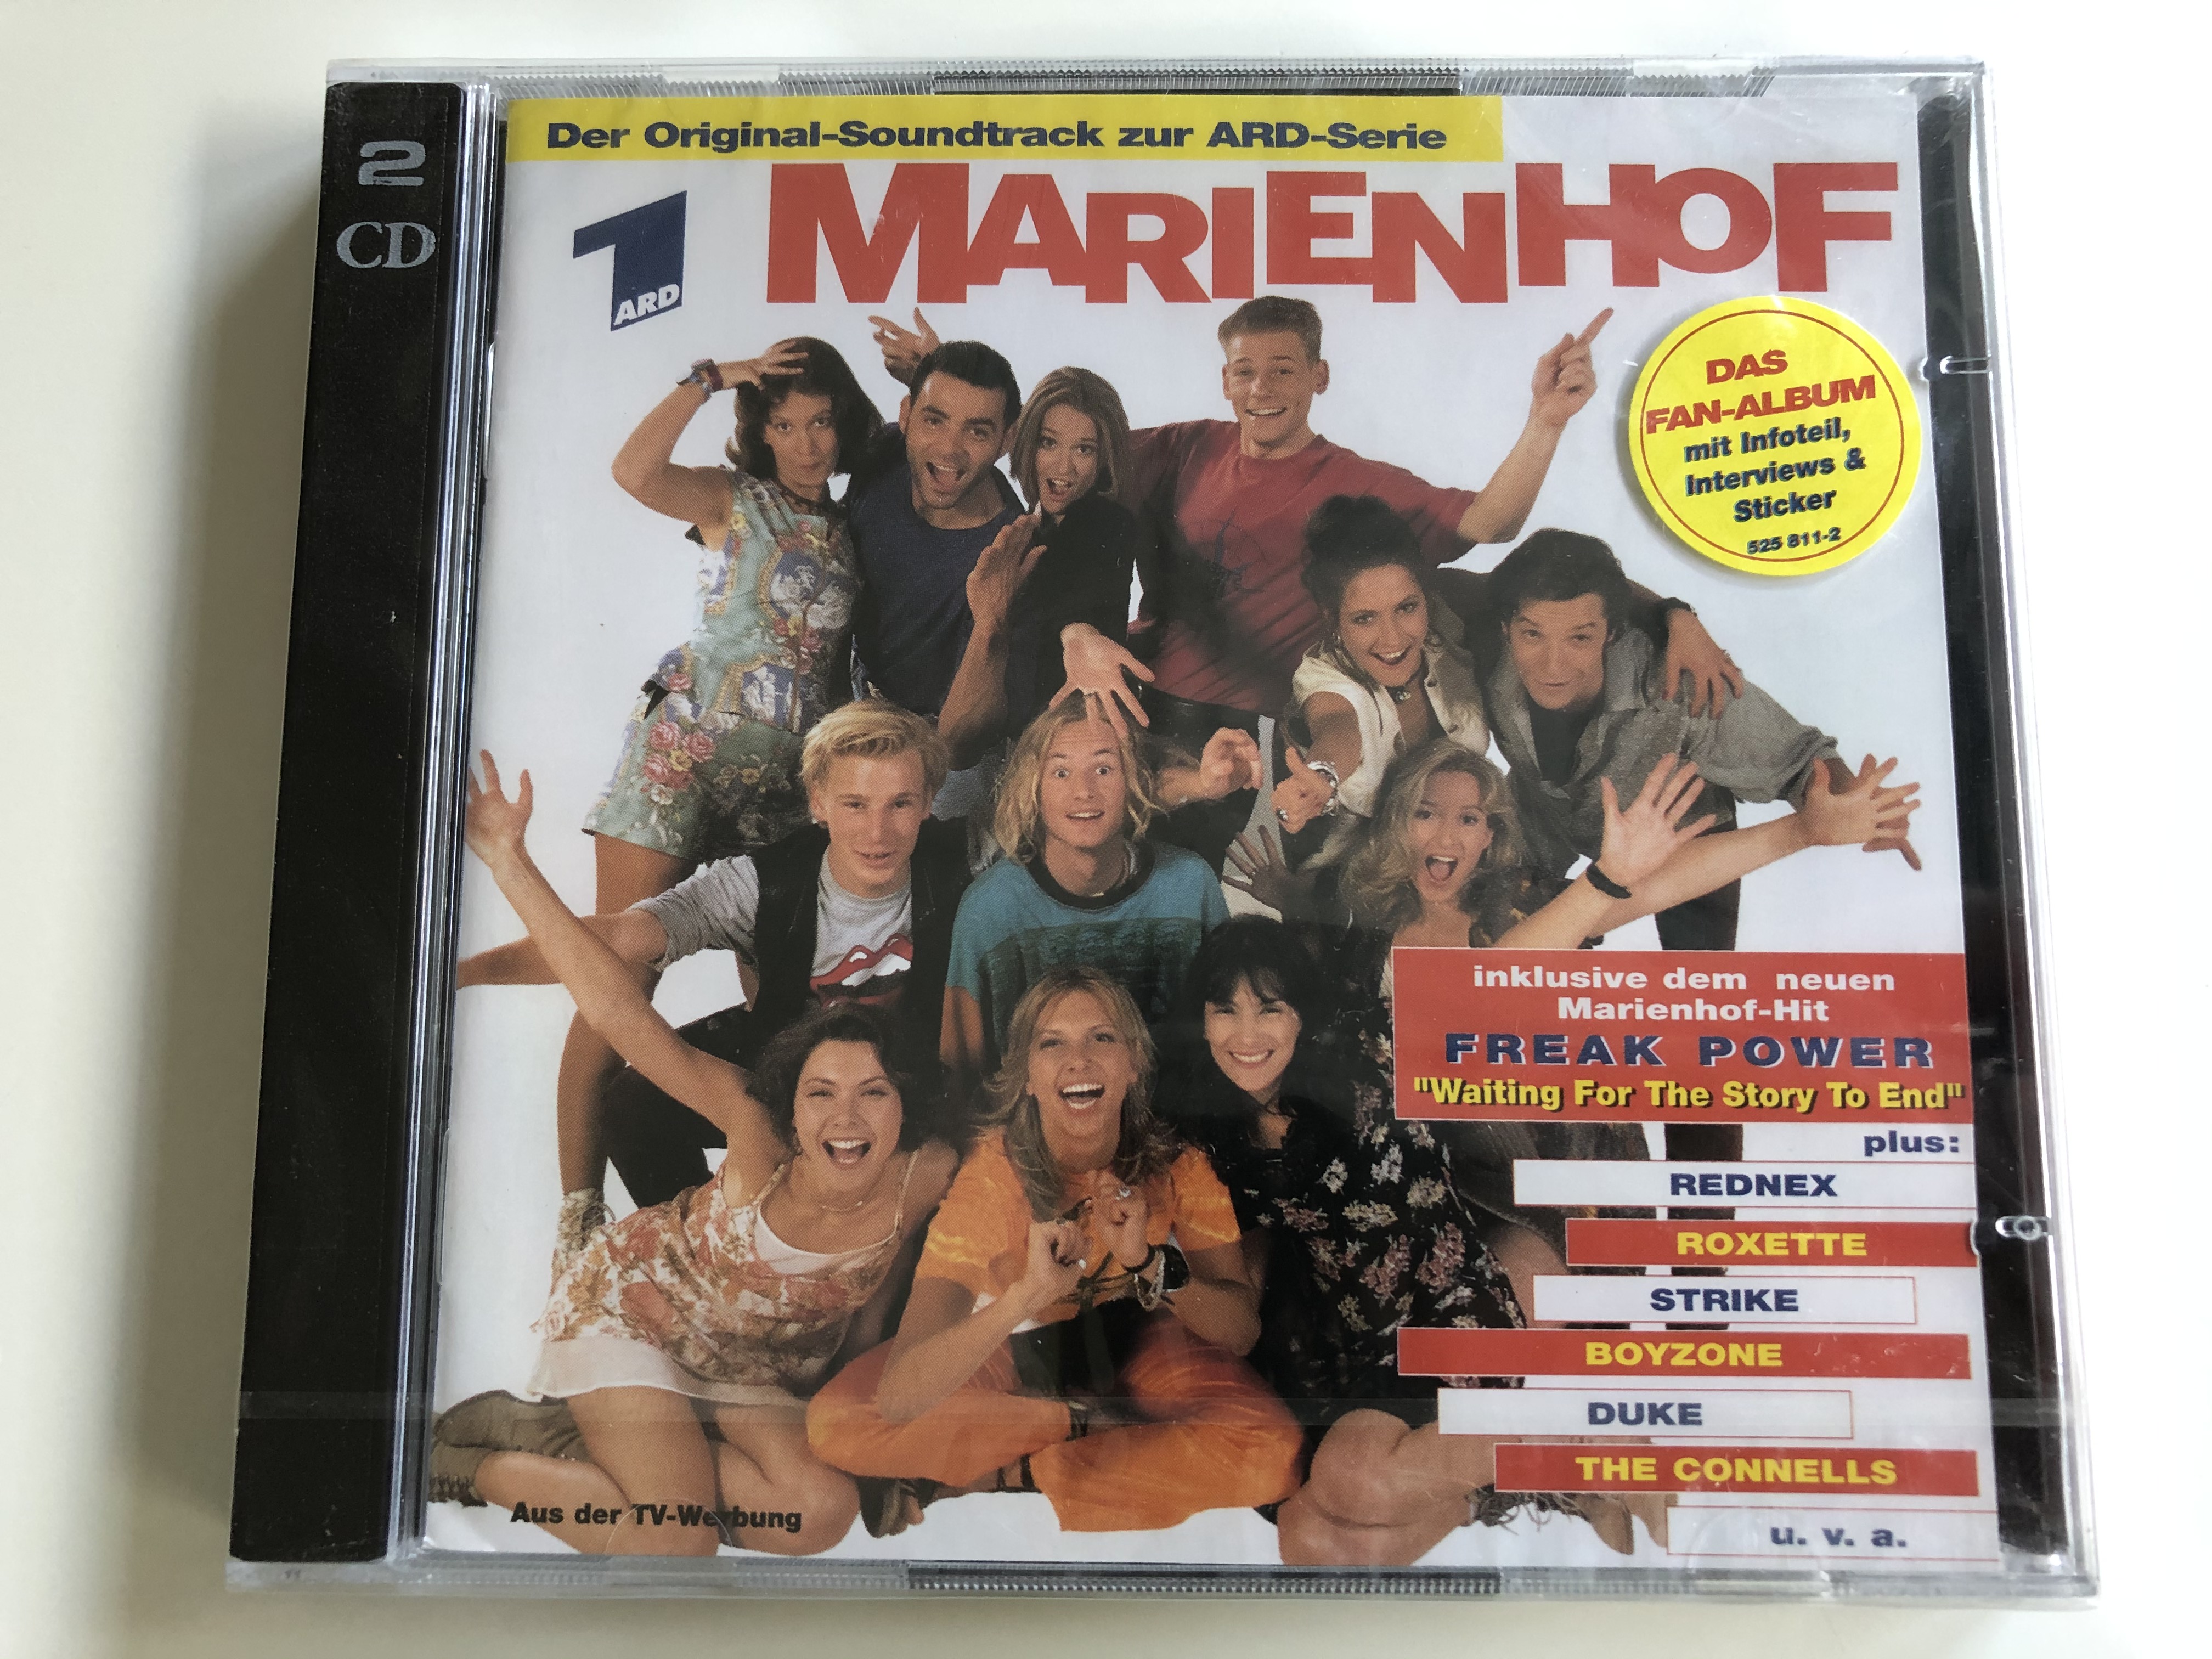 marienhof-der-original-soundtrack-zur-ard-serie-inklusive-dem-neuen-marienhof-hit-freak-power-waiting-for-the-story-to-end-plus-rednex-roxette-strike-boyzone-duke-the-connells-u.v.a.-1-.jpg